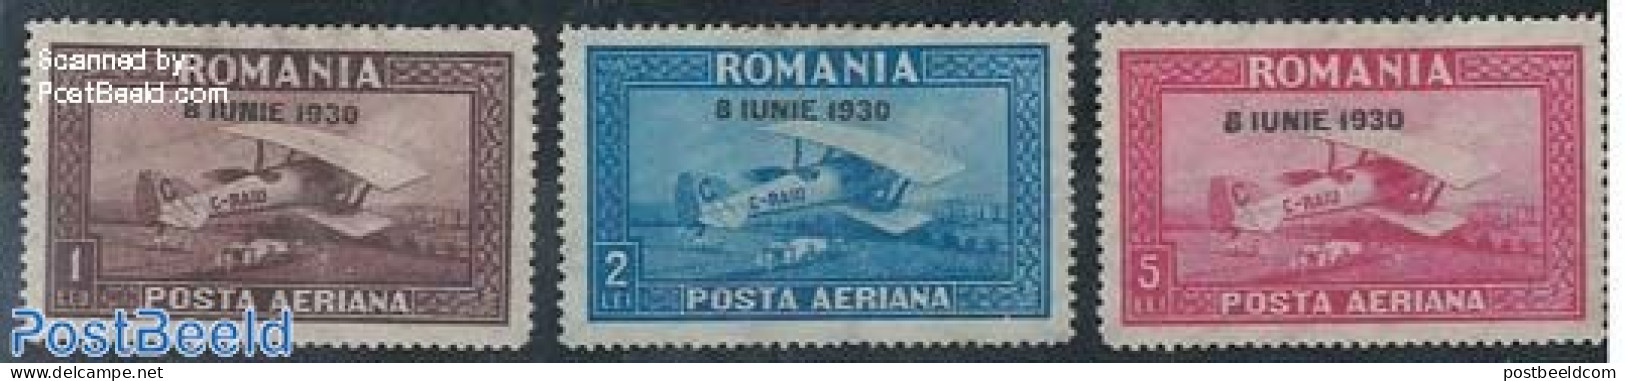 Romania 1930 Airmail Overprint 3v, WM Vertical, Unused (hinged), Transport - Aircraft & Aviation - Neufs